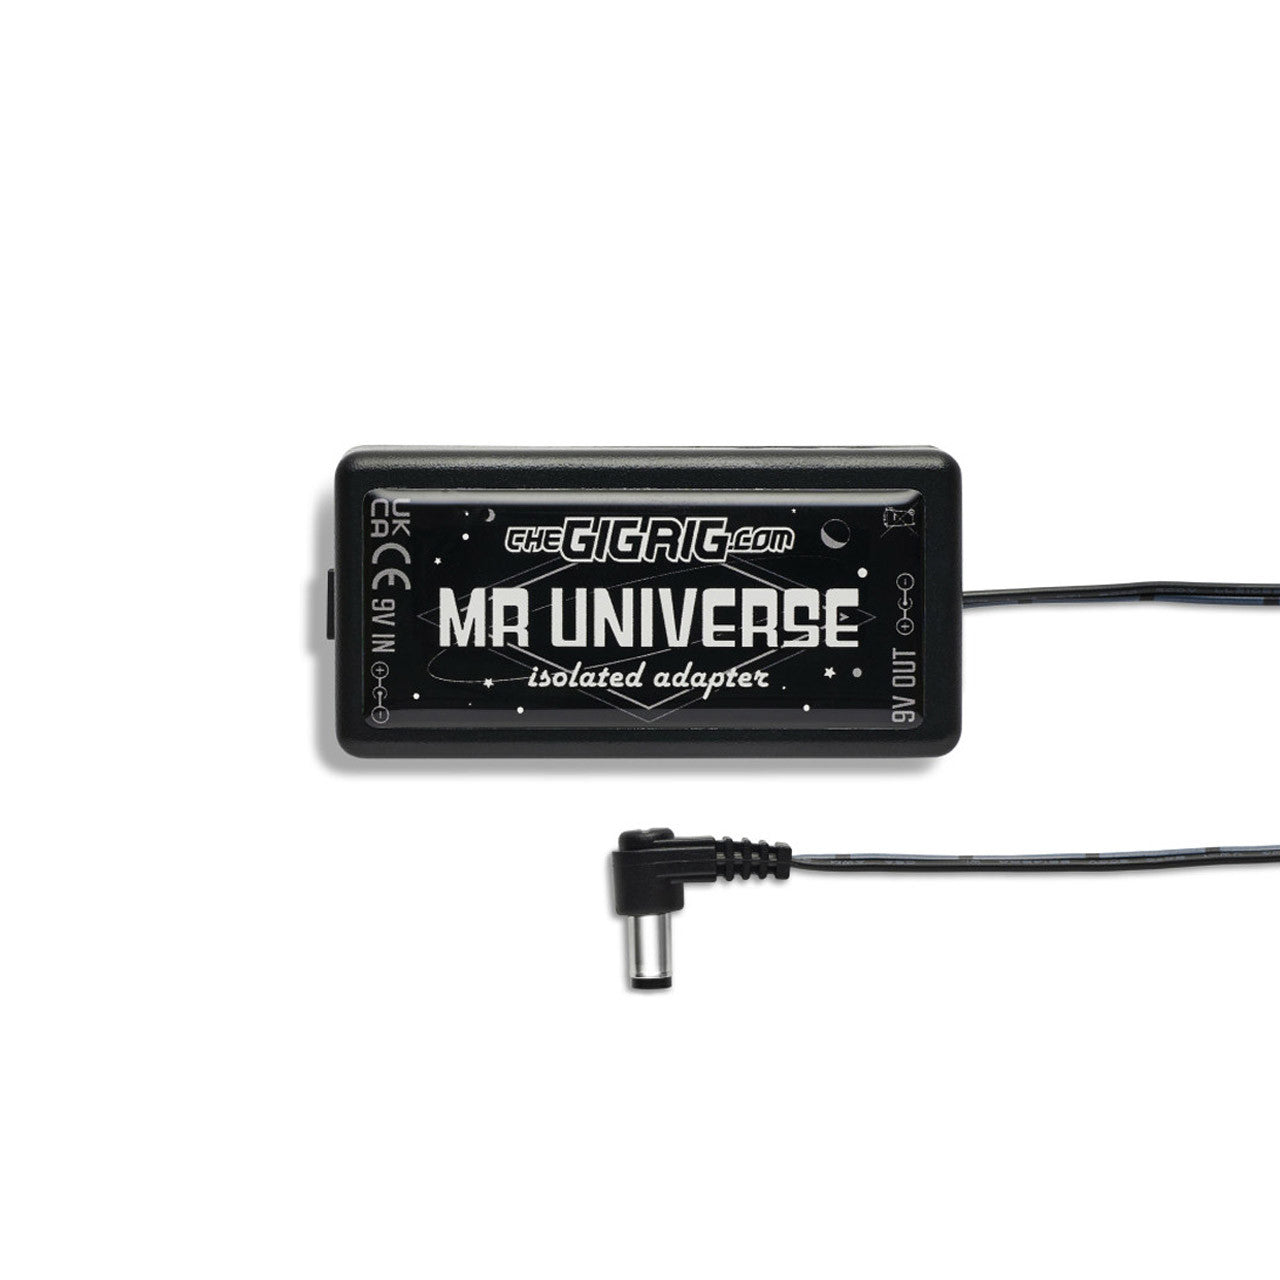 Mr Universe 9V DC